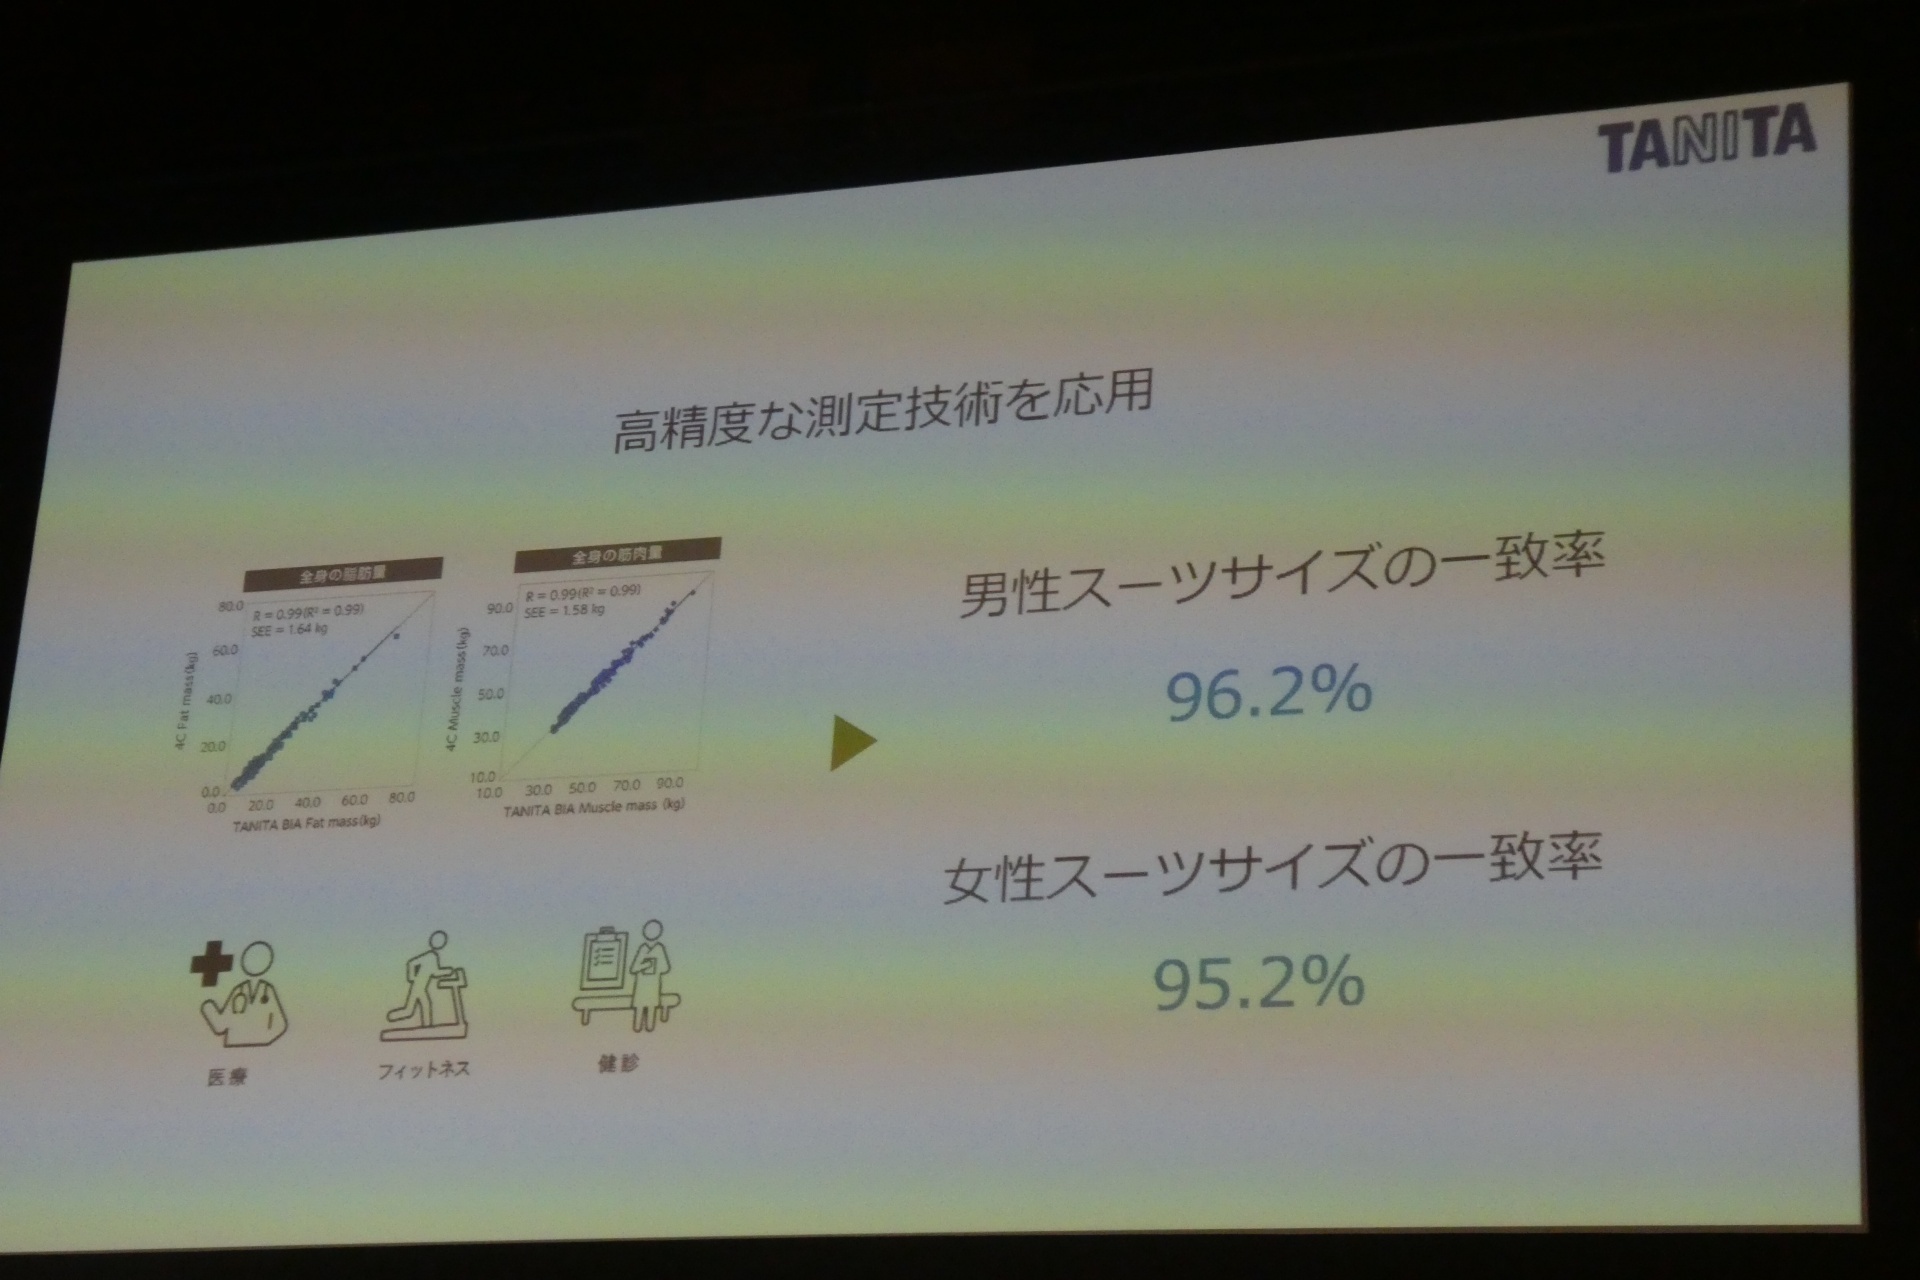 TANITA Body Shae Analyzerによって、スーツサイズチェックの一致率は95％以上を実現したと和智氏は語る